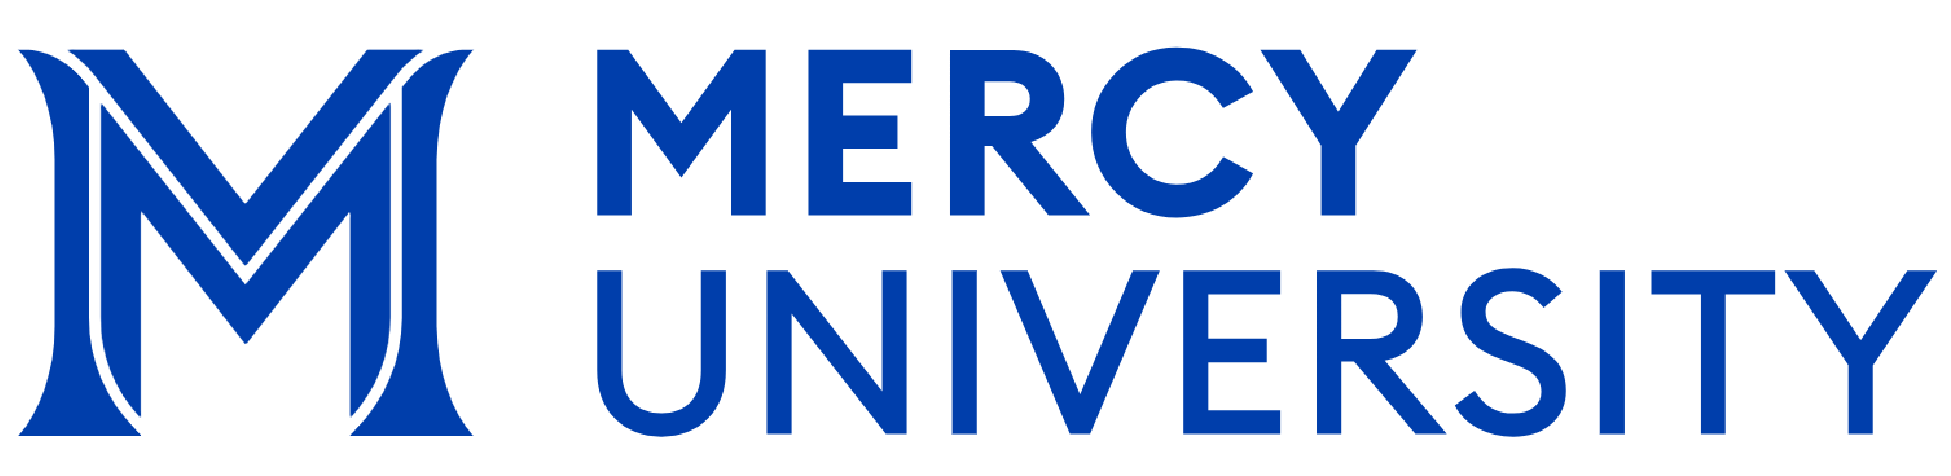 mercy-university-logo.png